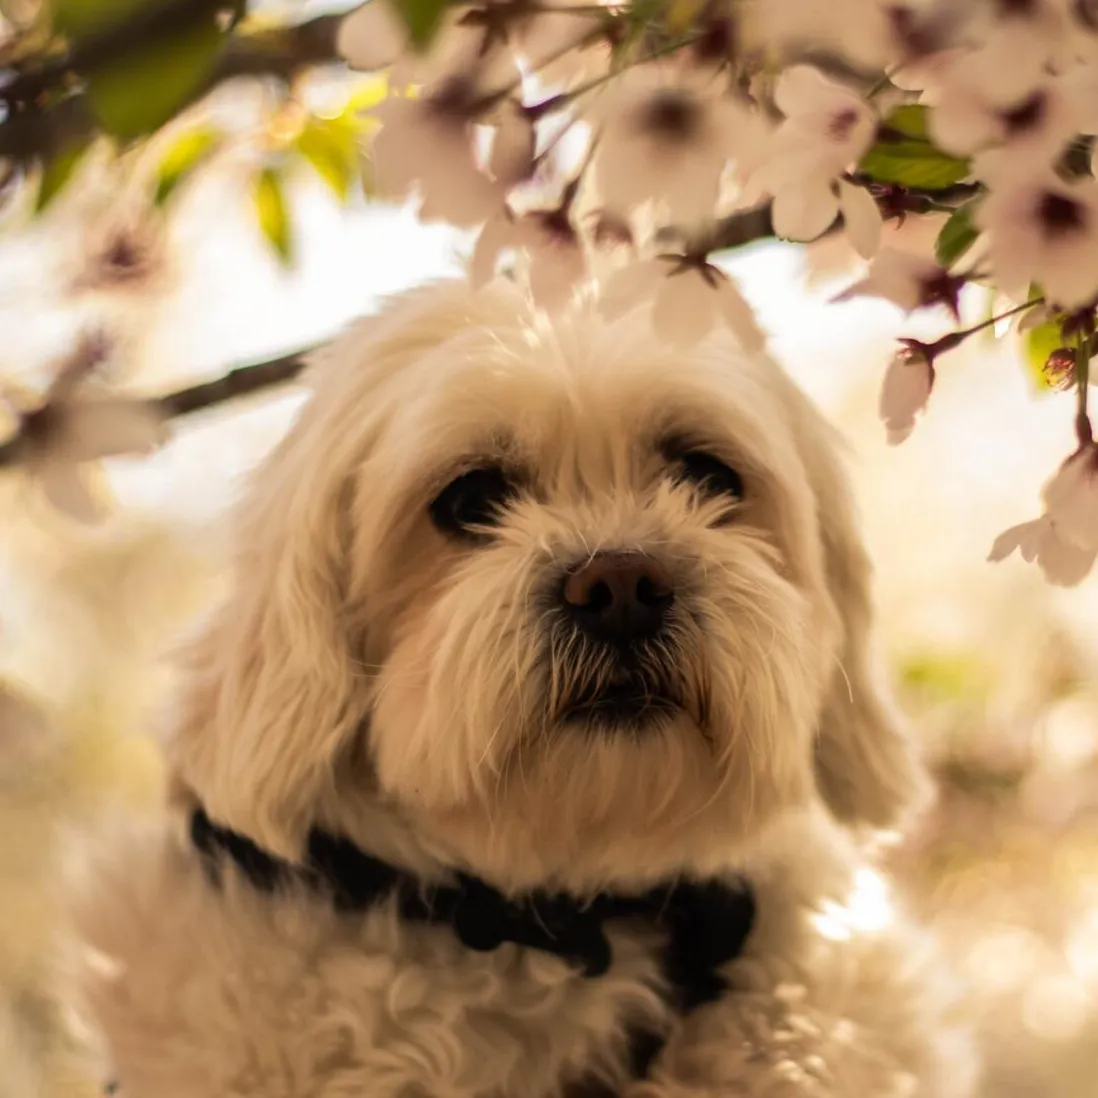 Dog next to cherry blossoms